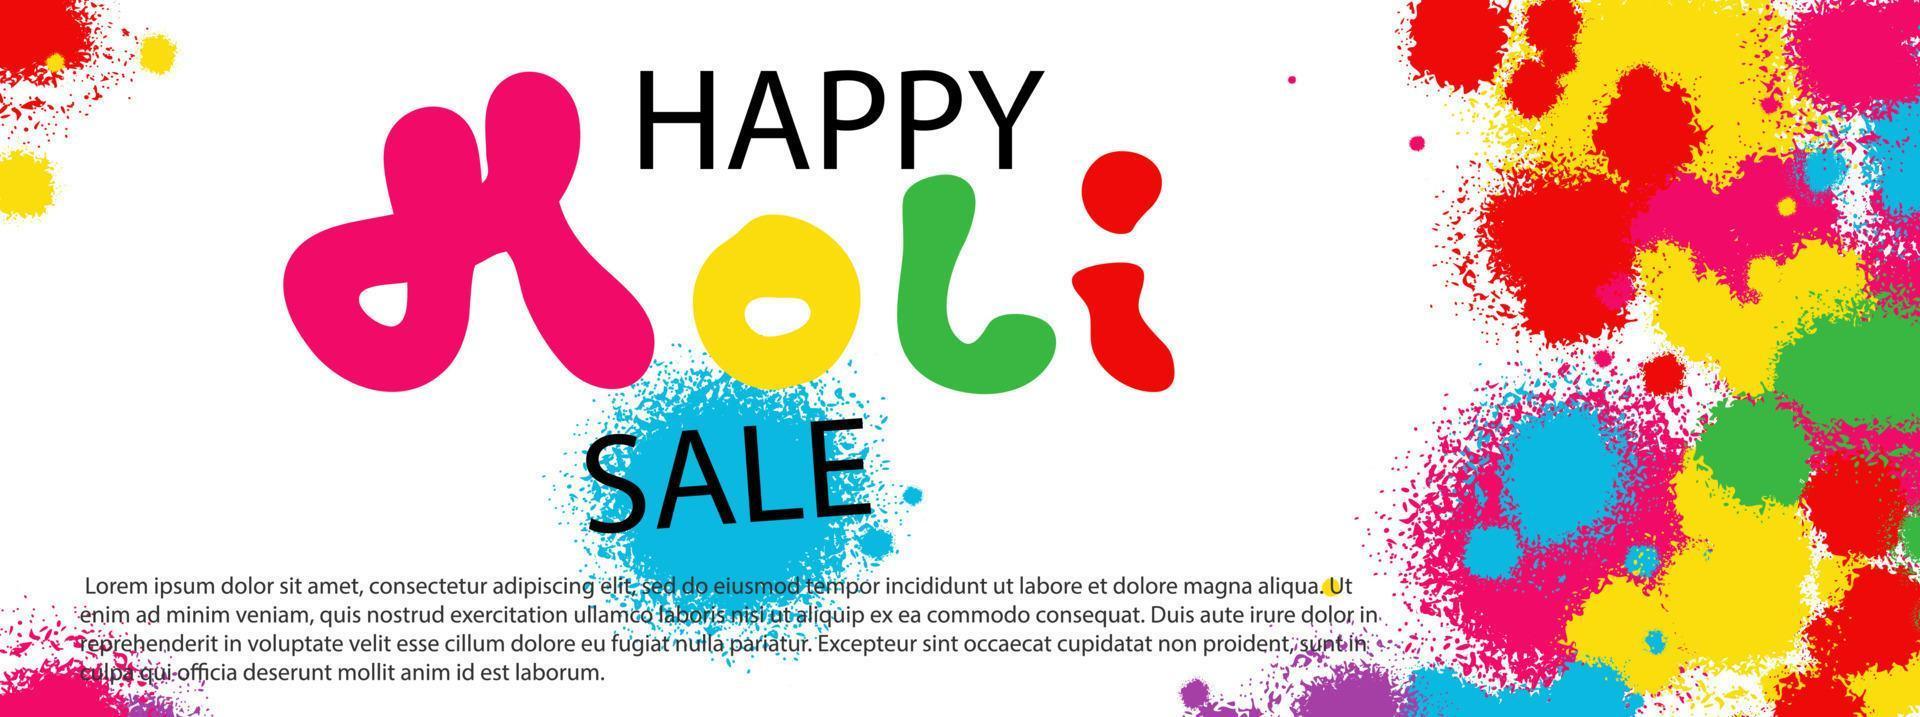 Happy Holi sale horizontal background vector illustration